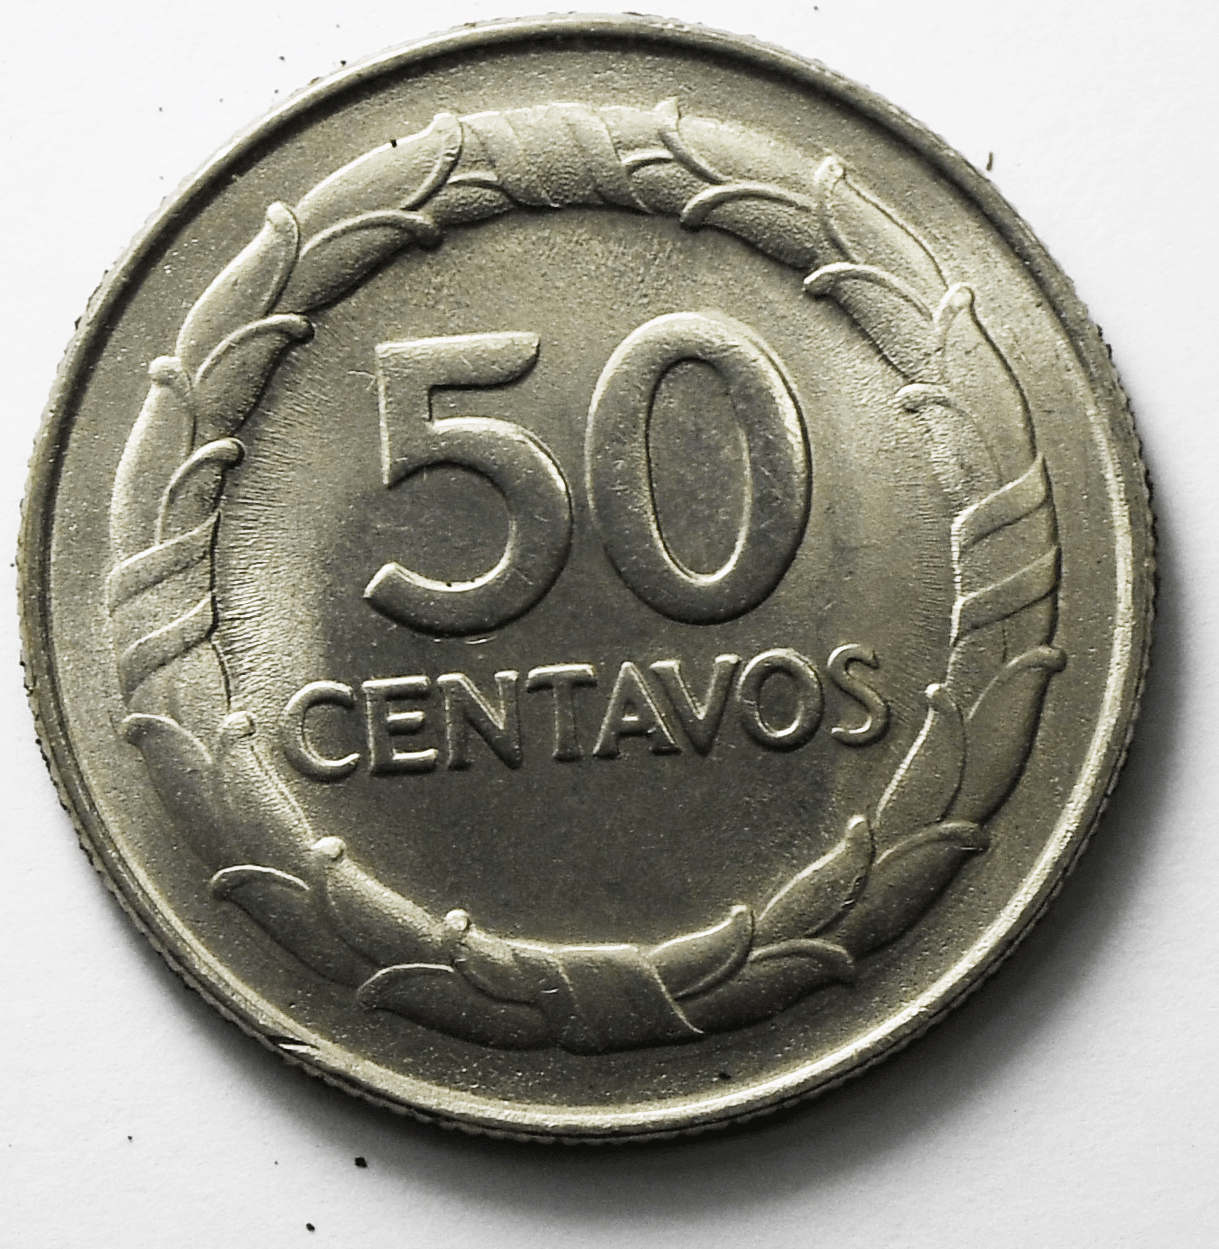 1967 Colombia 50 Centavos KM# 228 Copper Nickel Uncirculated Coin